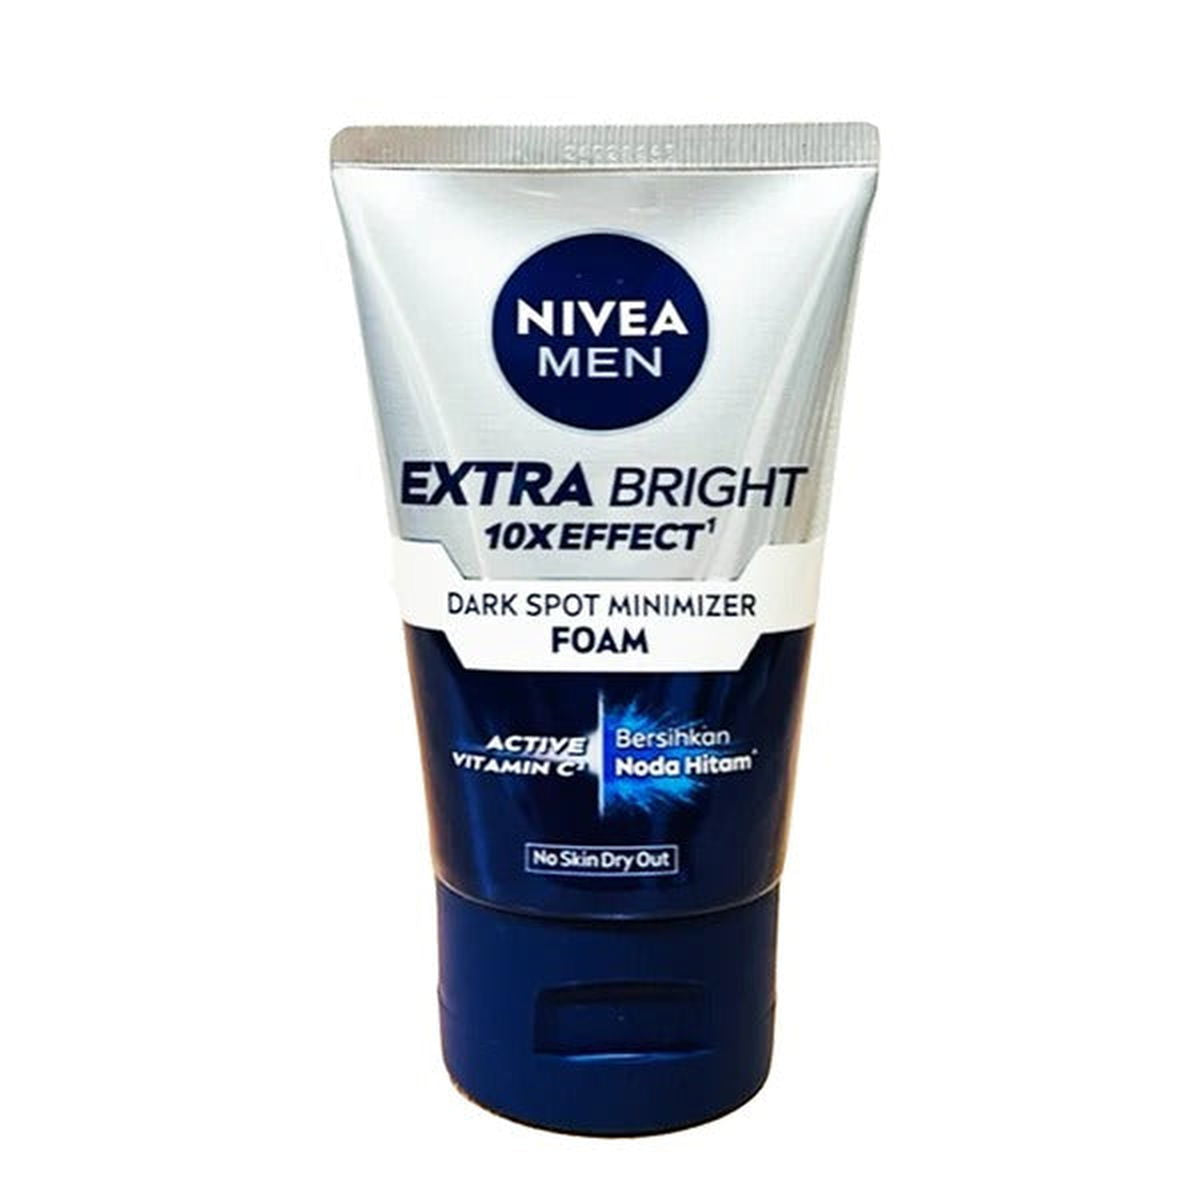 Nivea Men Extra Bright 10x Effect Dark Spot Minimizer Foam, 100ml - Vitamins House